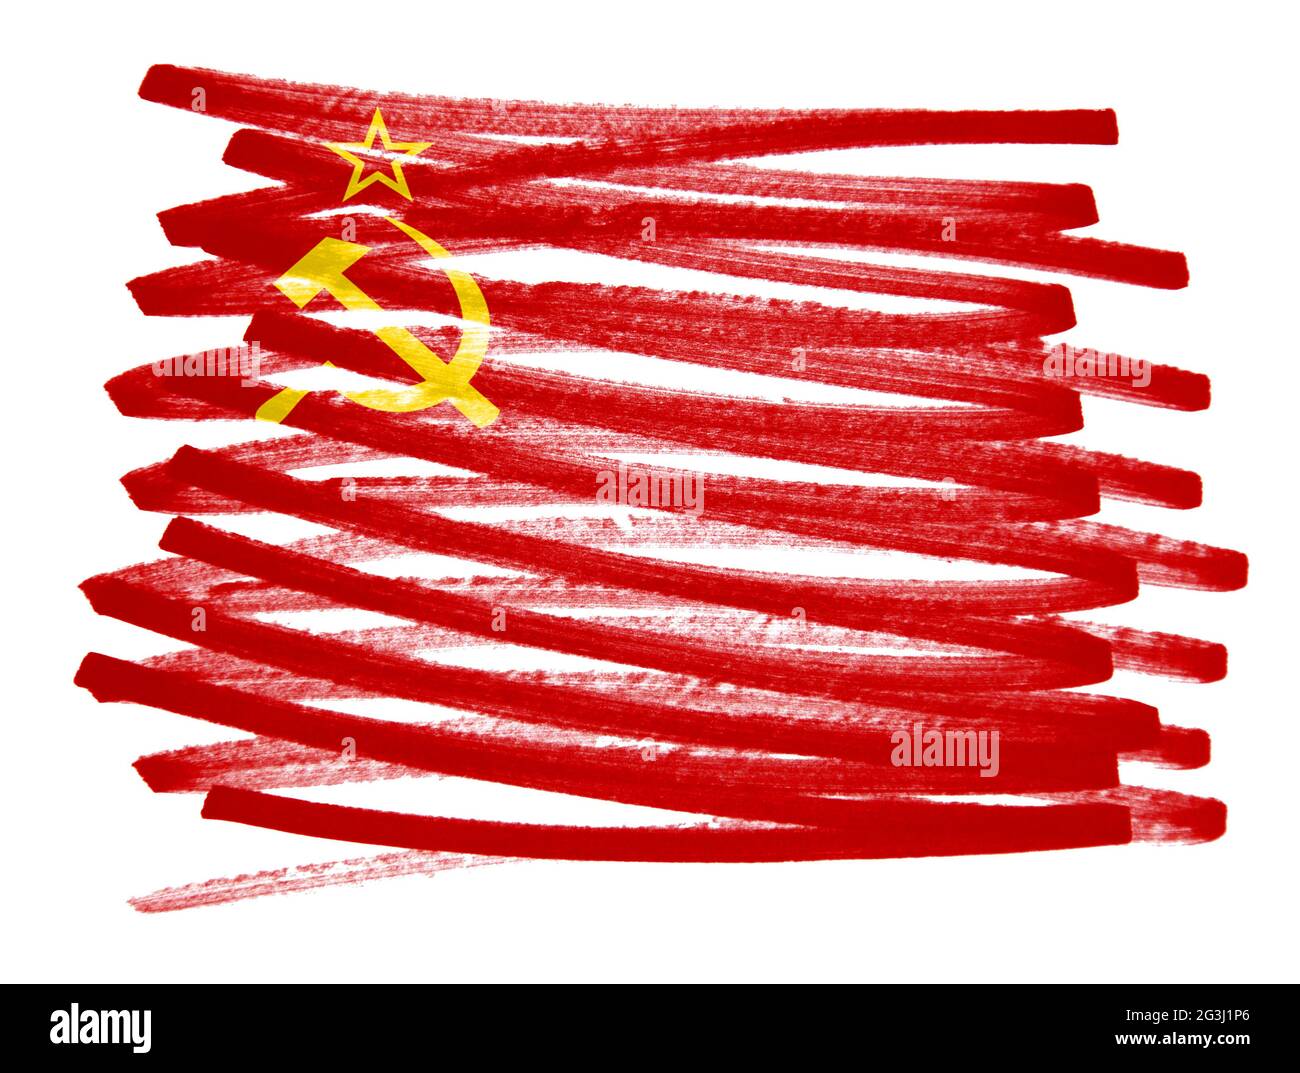 Flag illustration - USSR Stock Photo